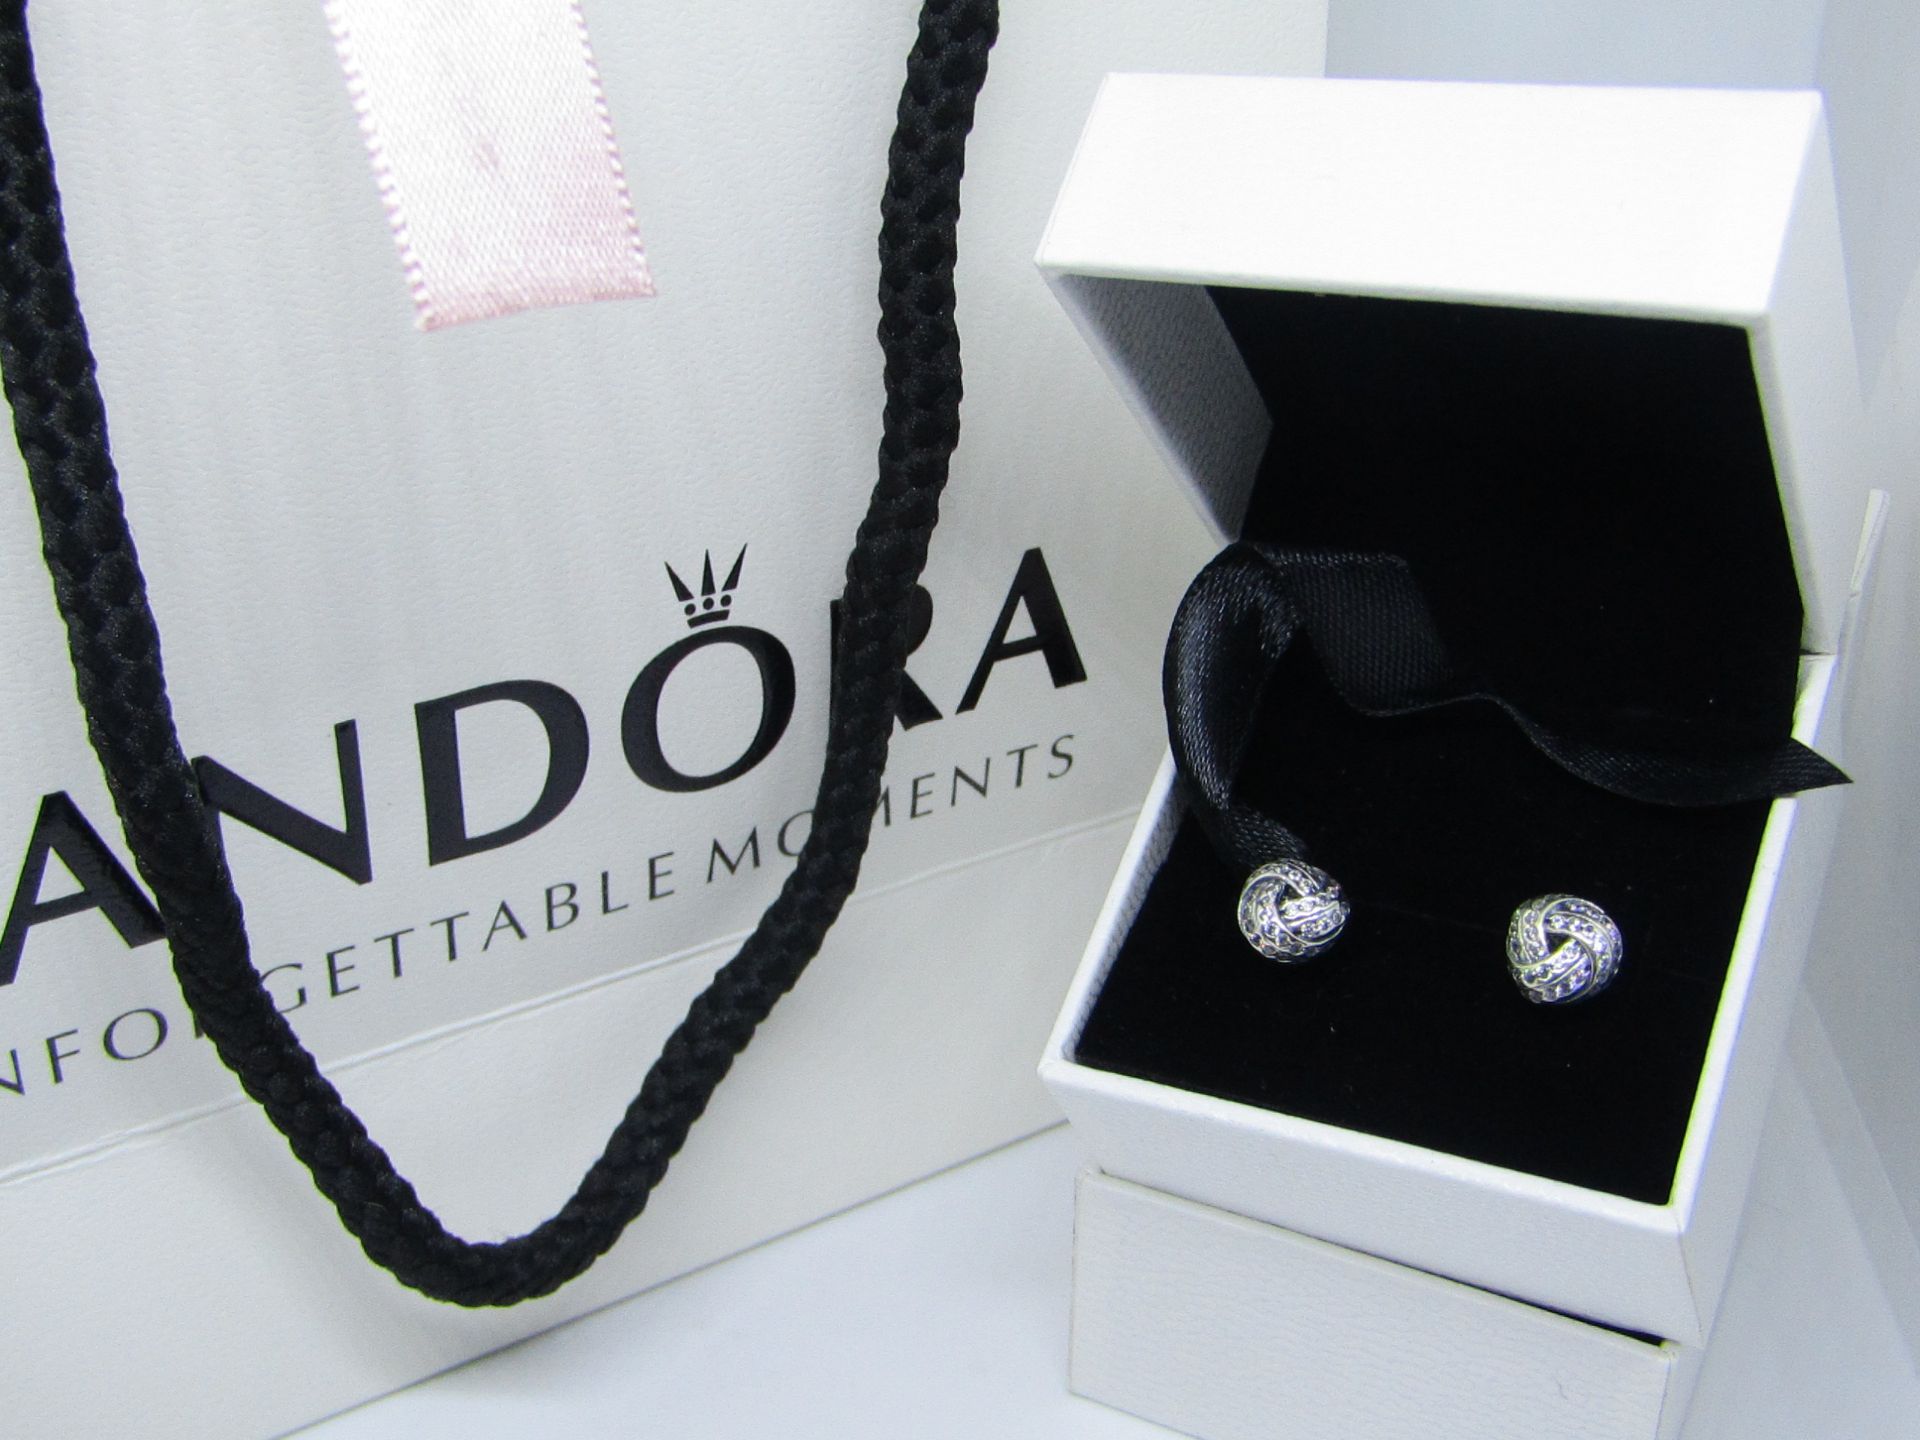 Pandora 925 Silver & Crystal Earrings in Presentation box & Pandora Gift Bag see image for design